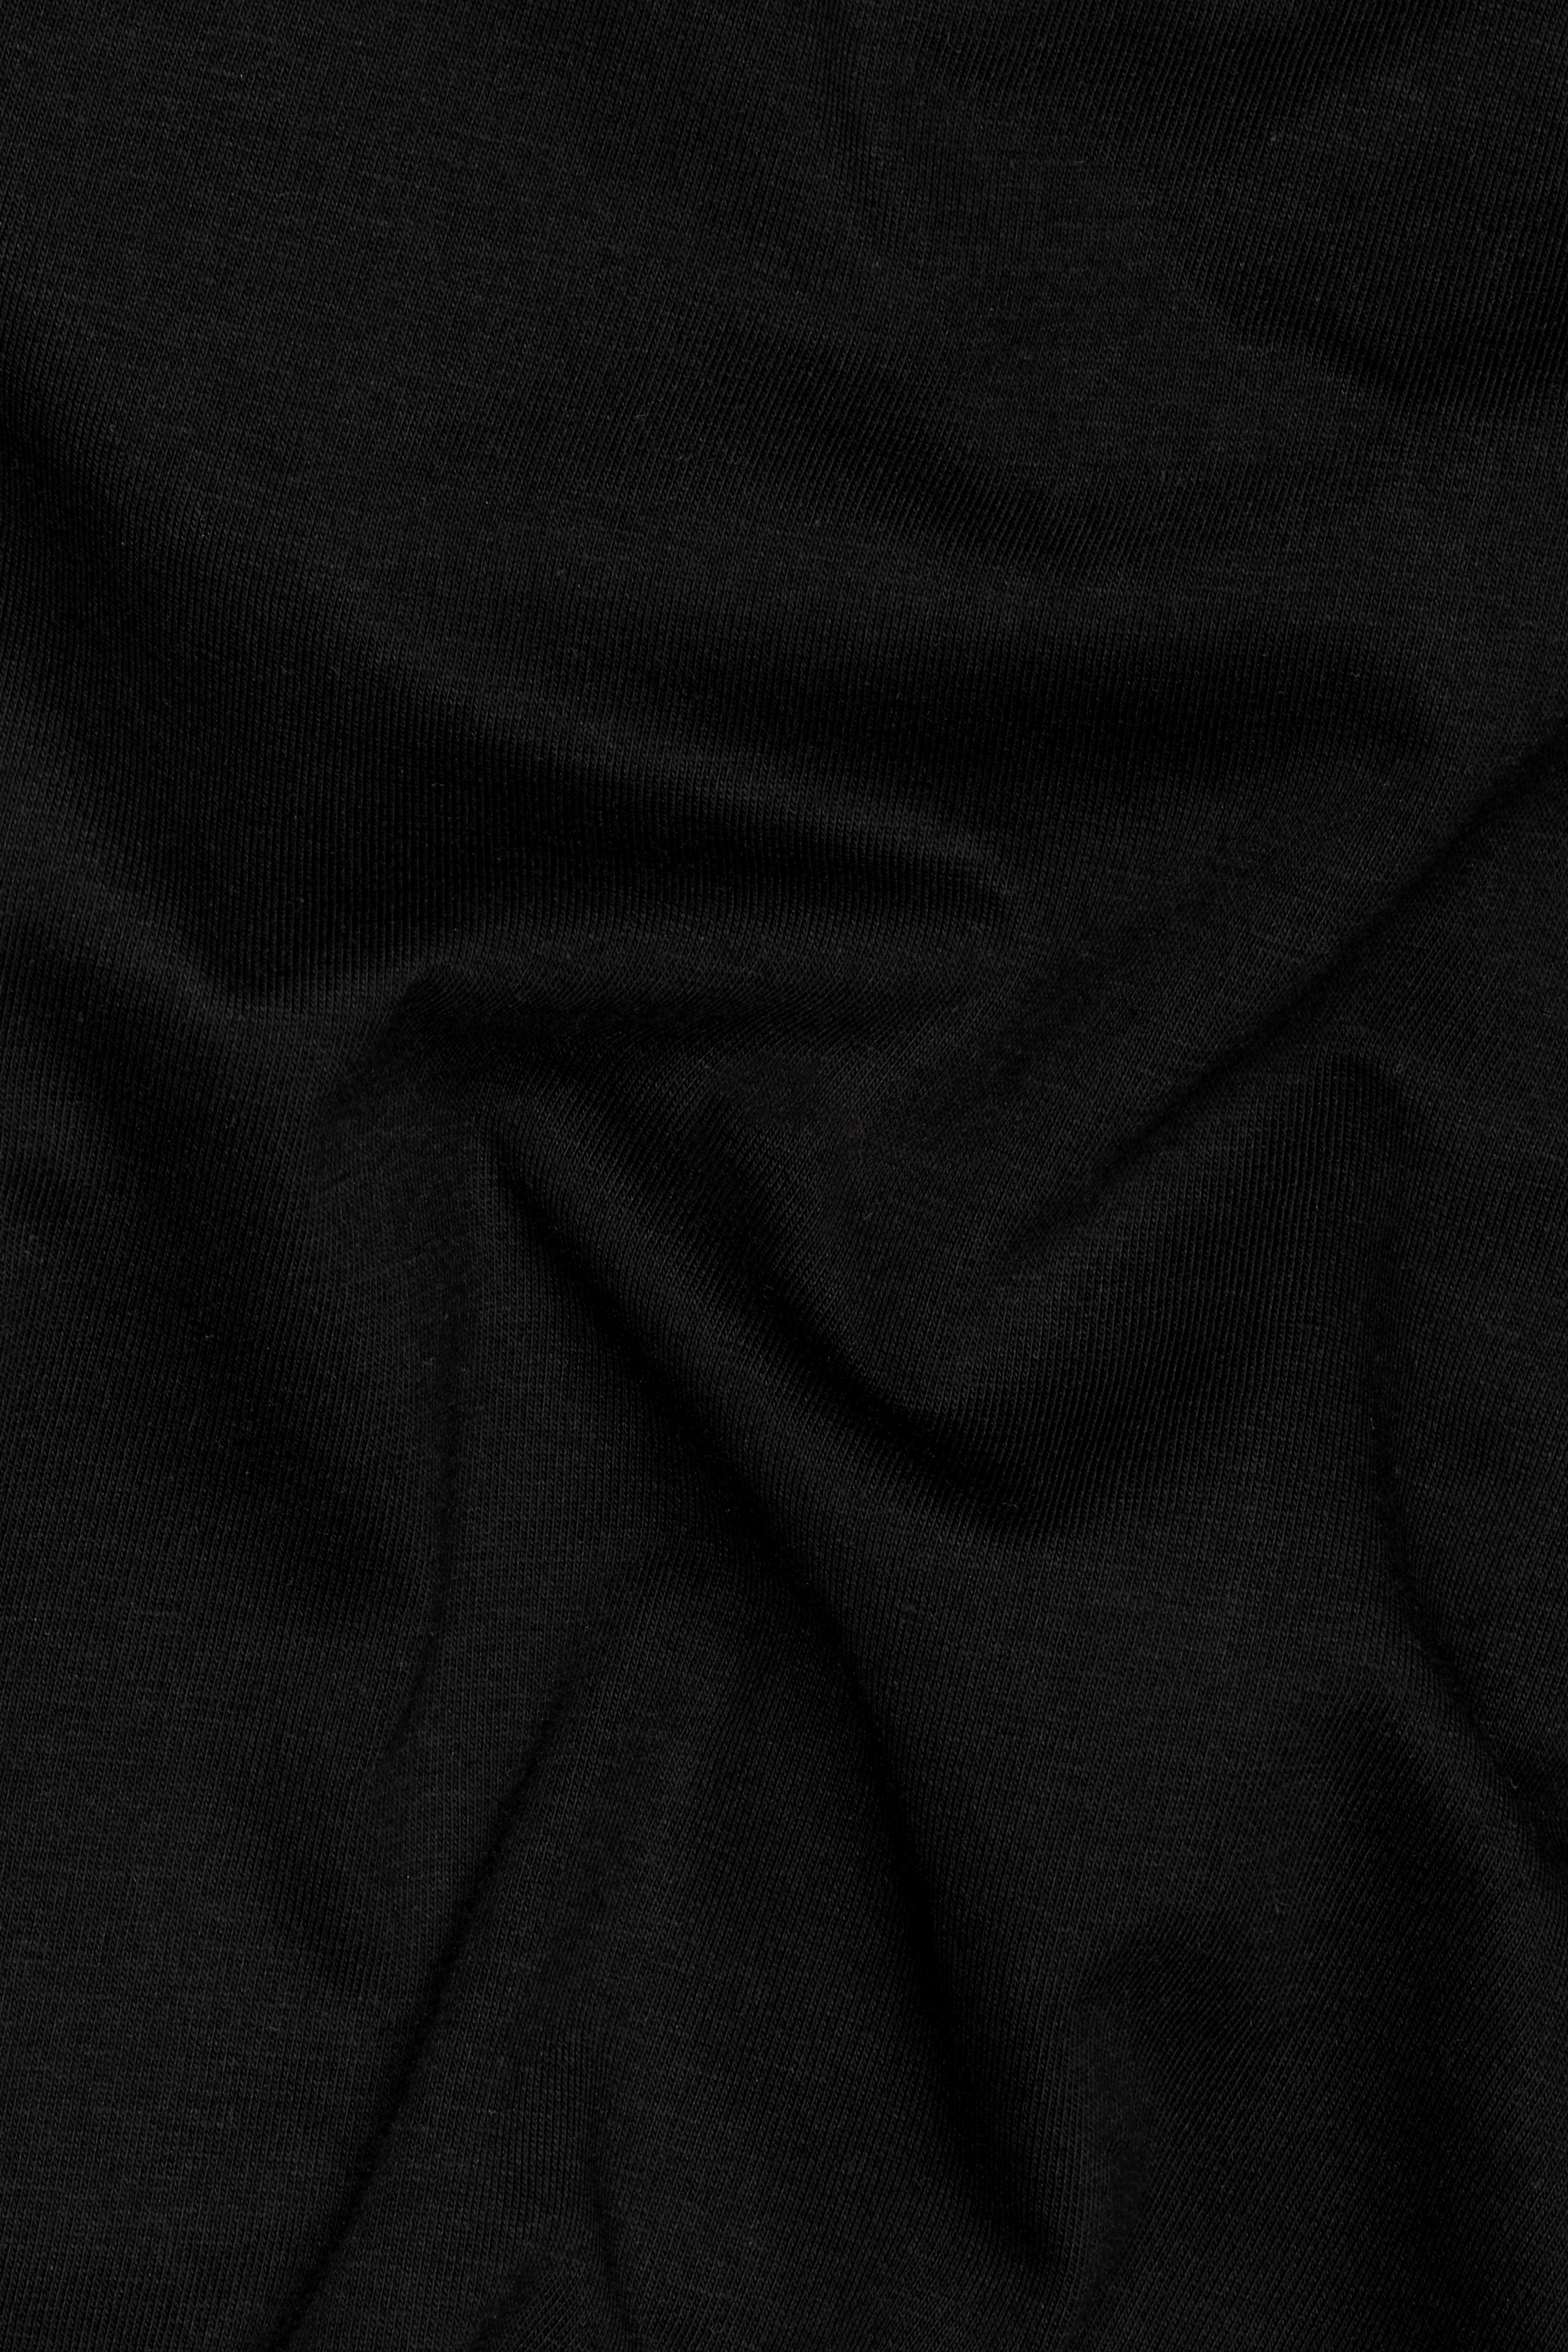 Jade Black Printed Premium Cotton T-Shirt TS907-S, TS907-M, TS907-L, TS907-XL, TS907-XXL